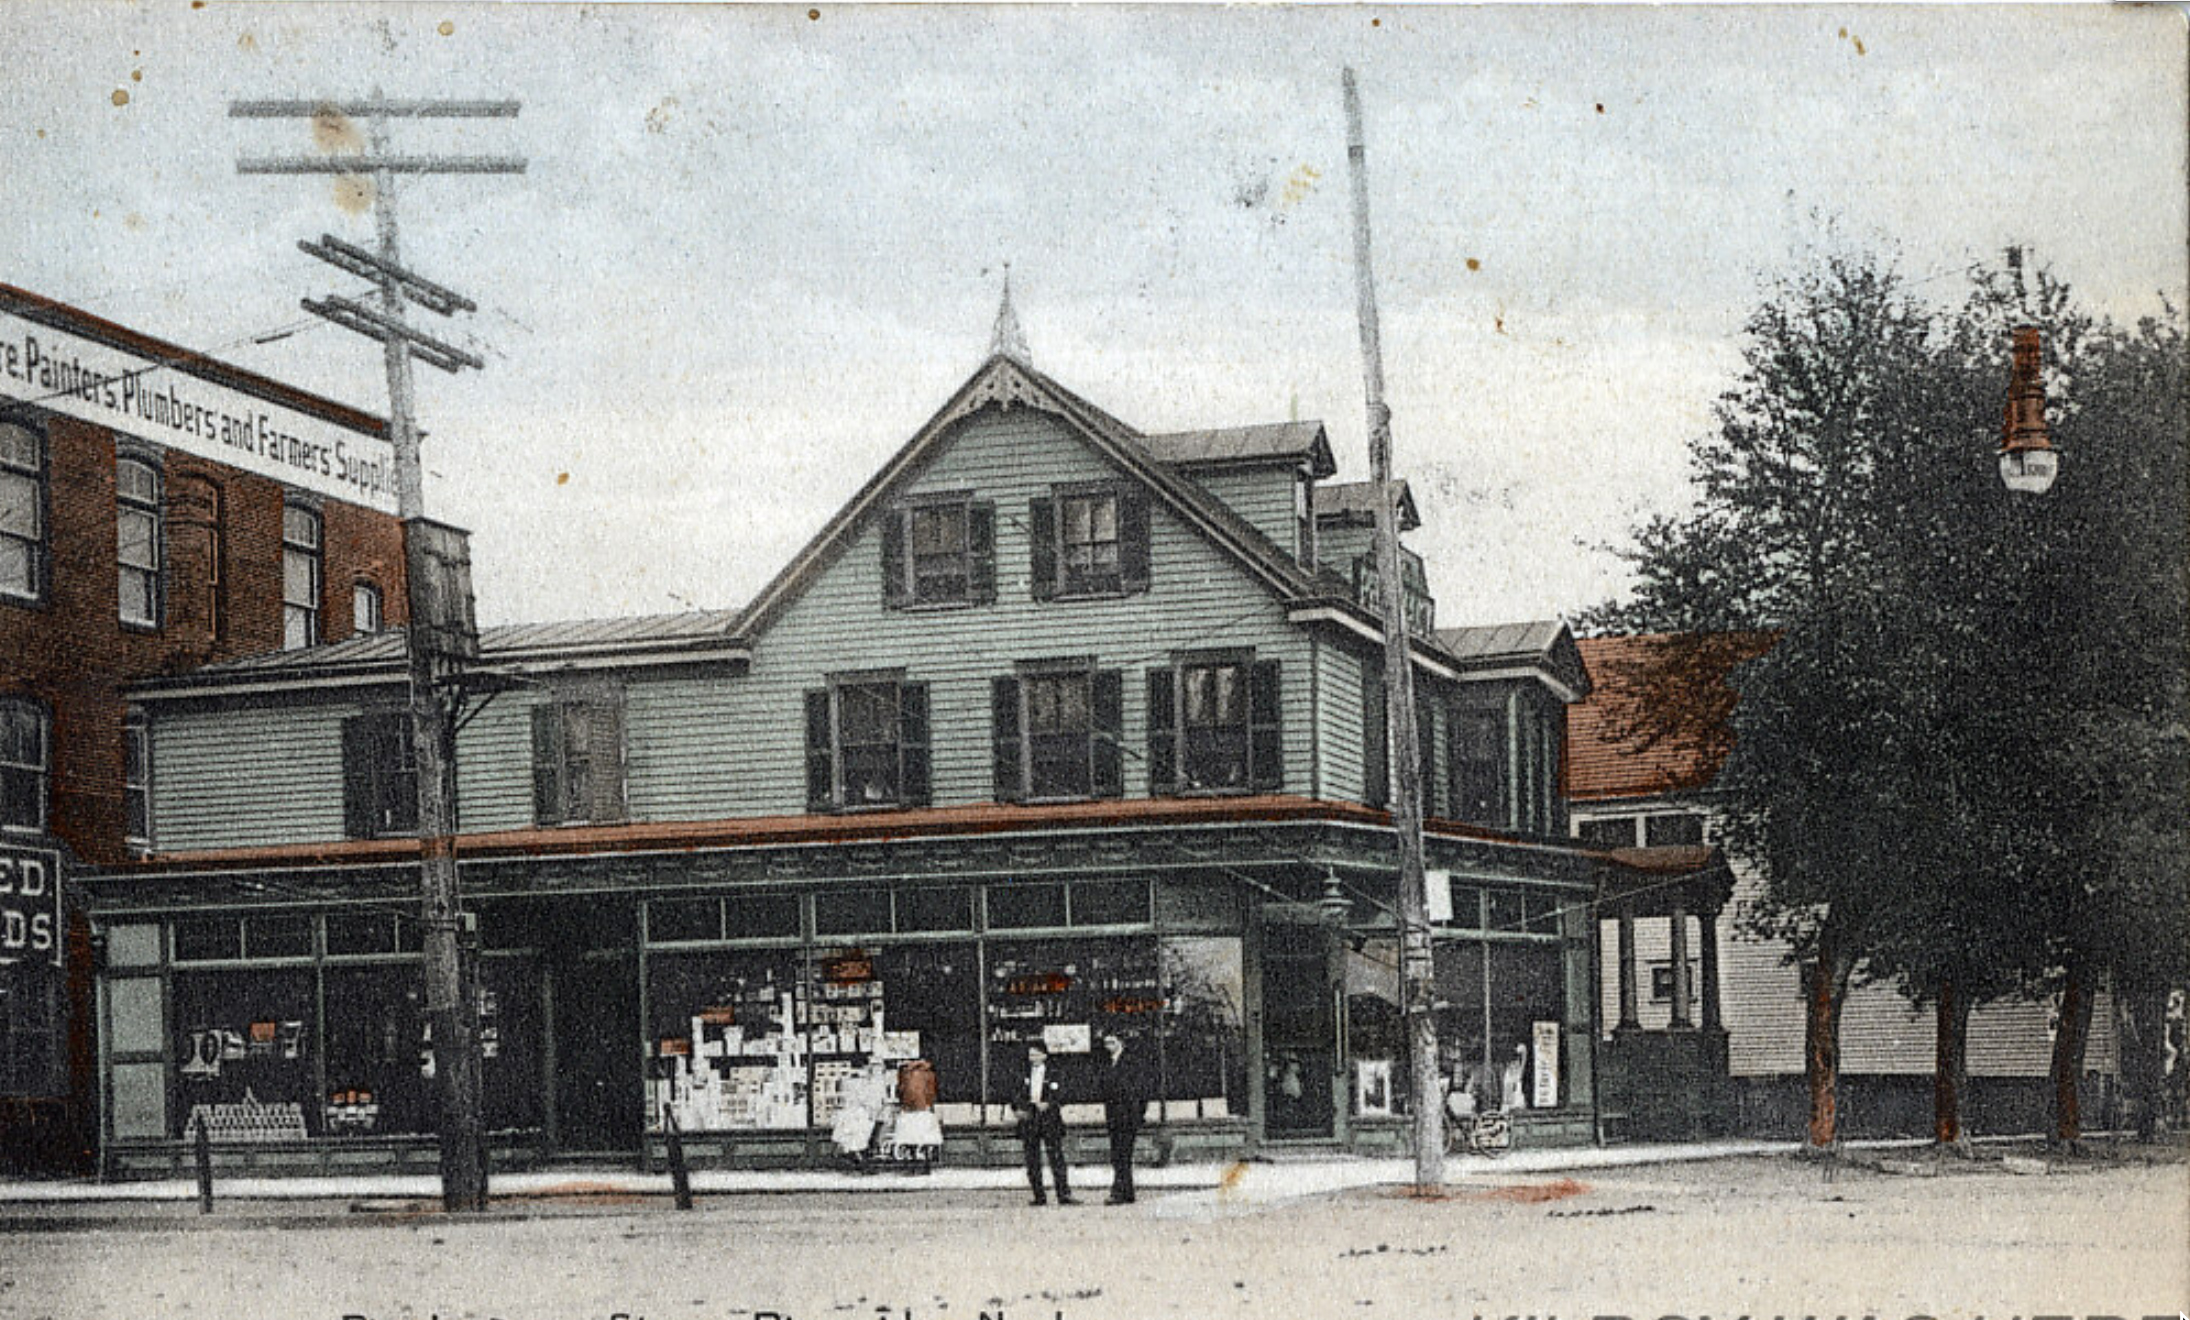 Riverside - Pines Drug Store - c 1910 - B